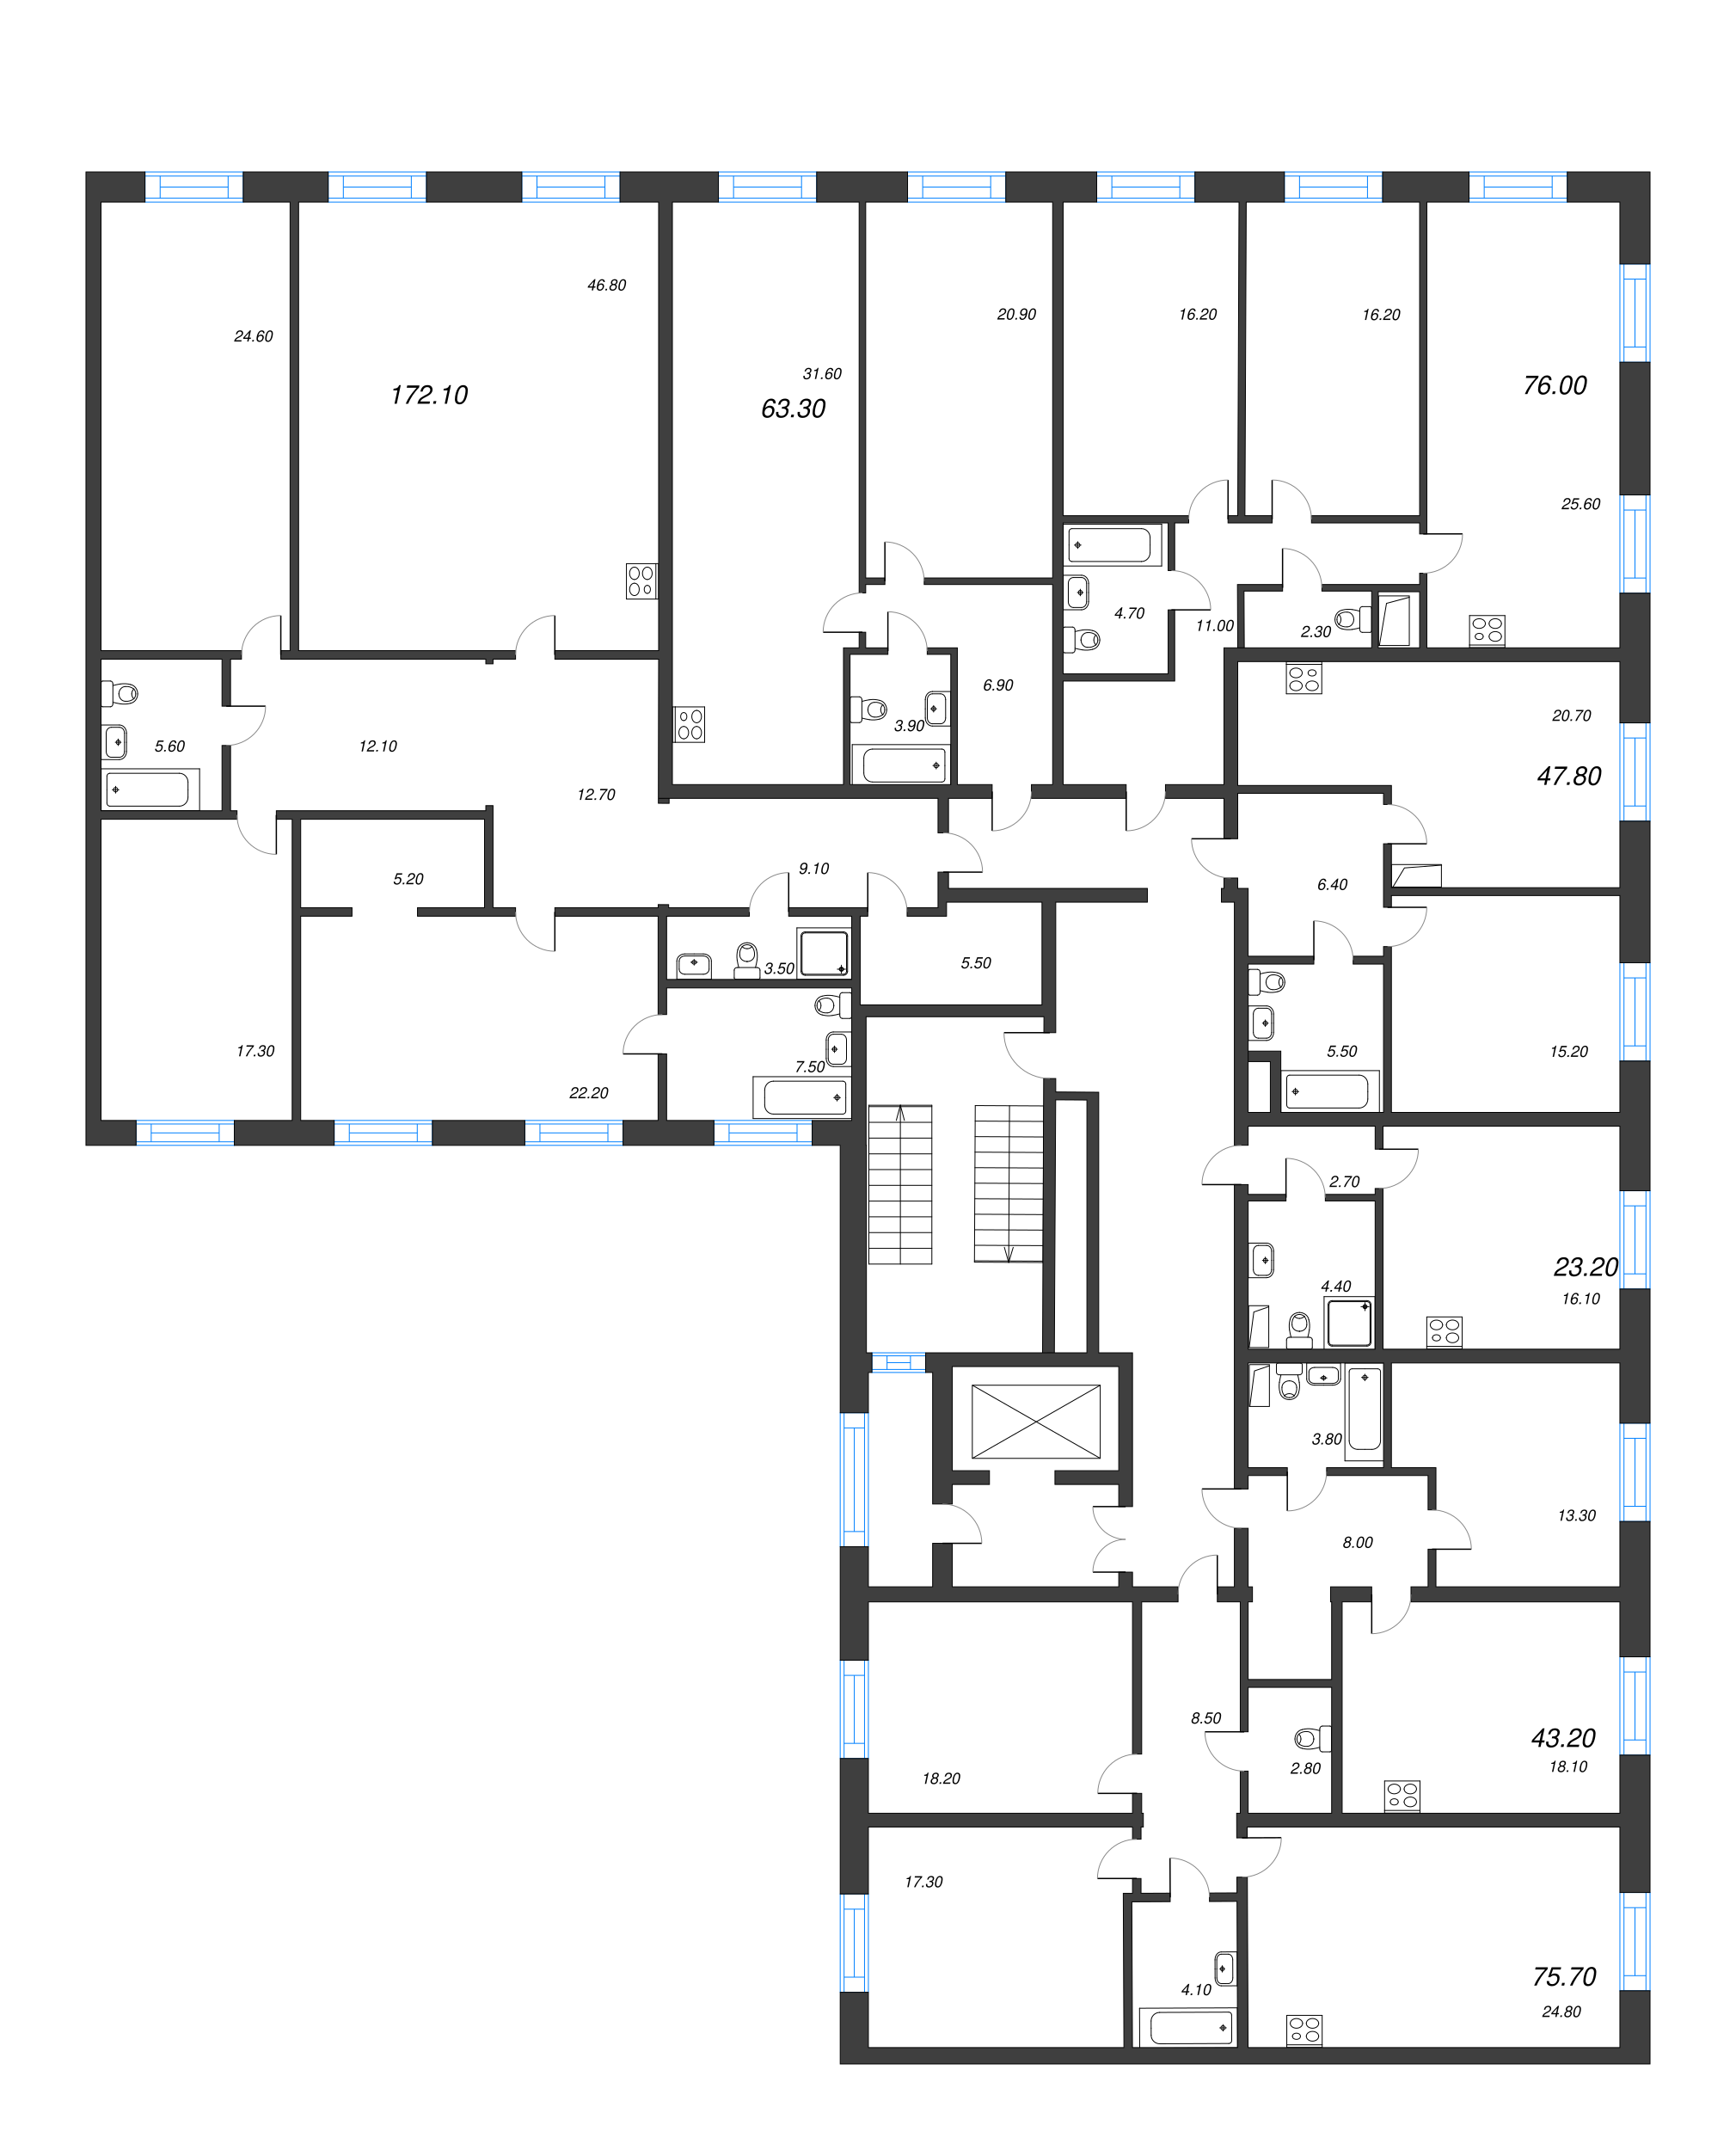 2-комнатная (Евро) квартира, 47.7 м² - планировка этажа